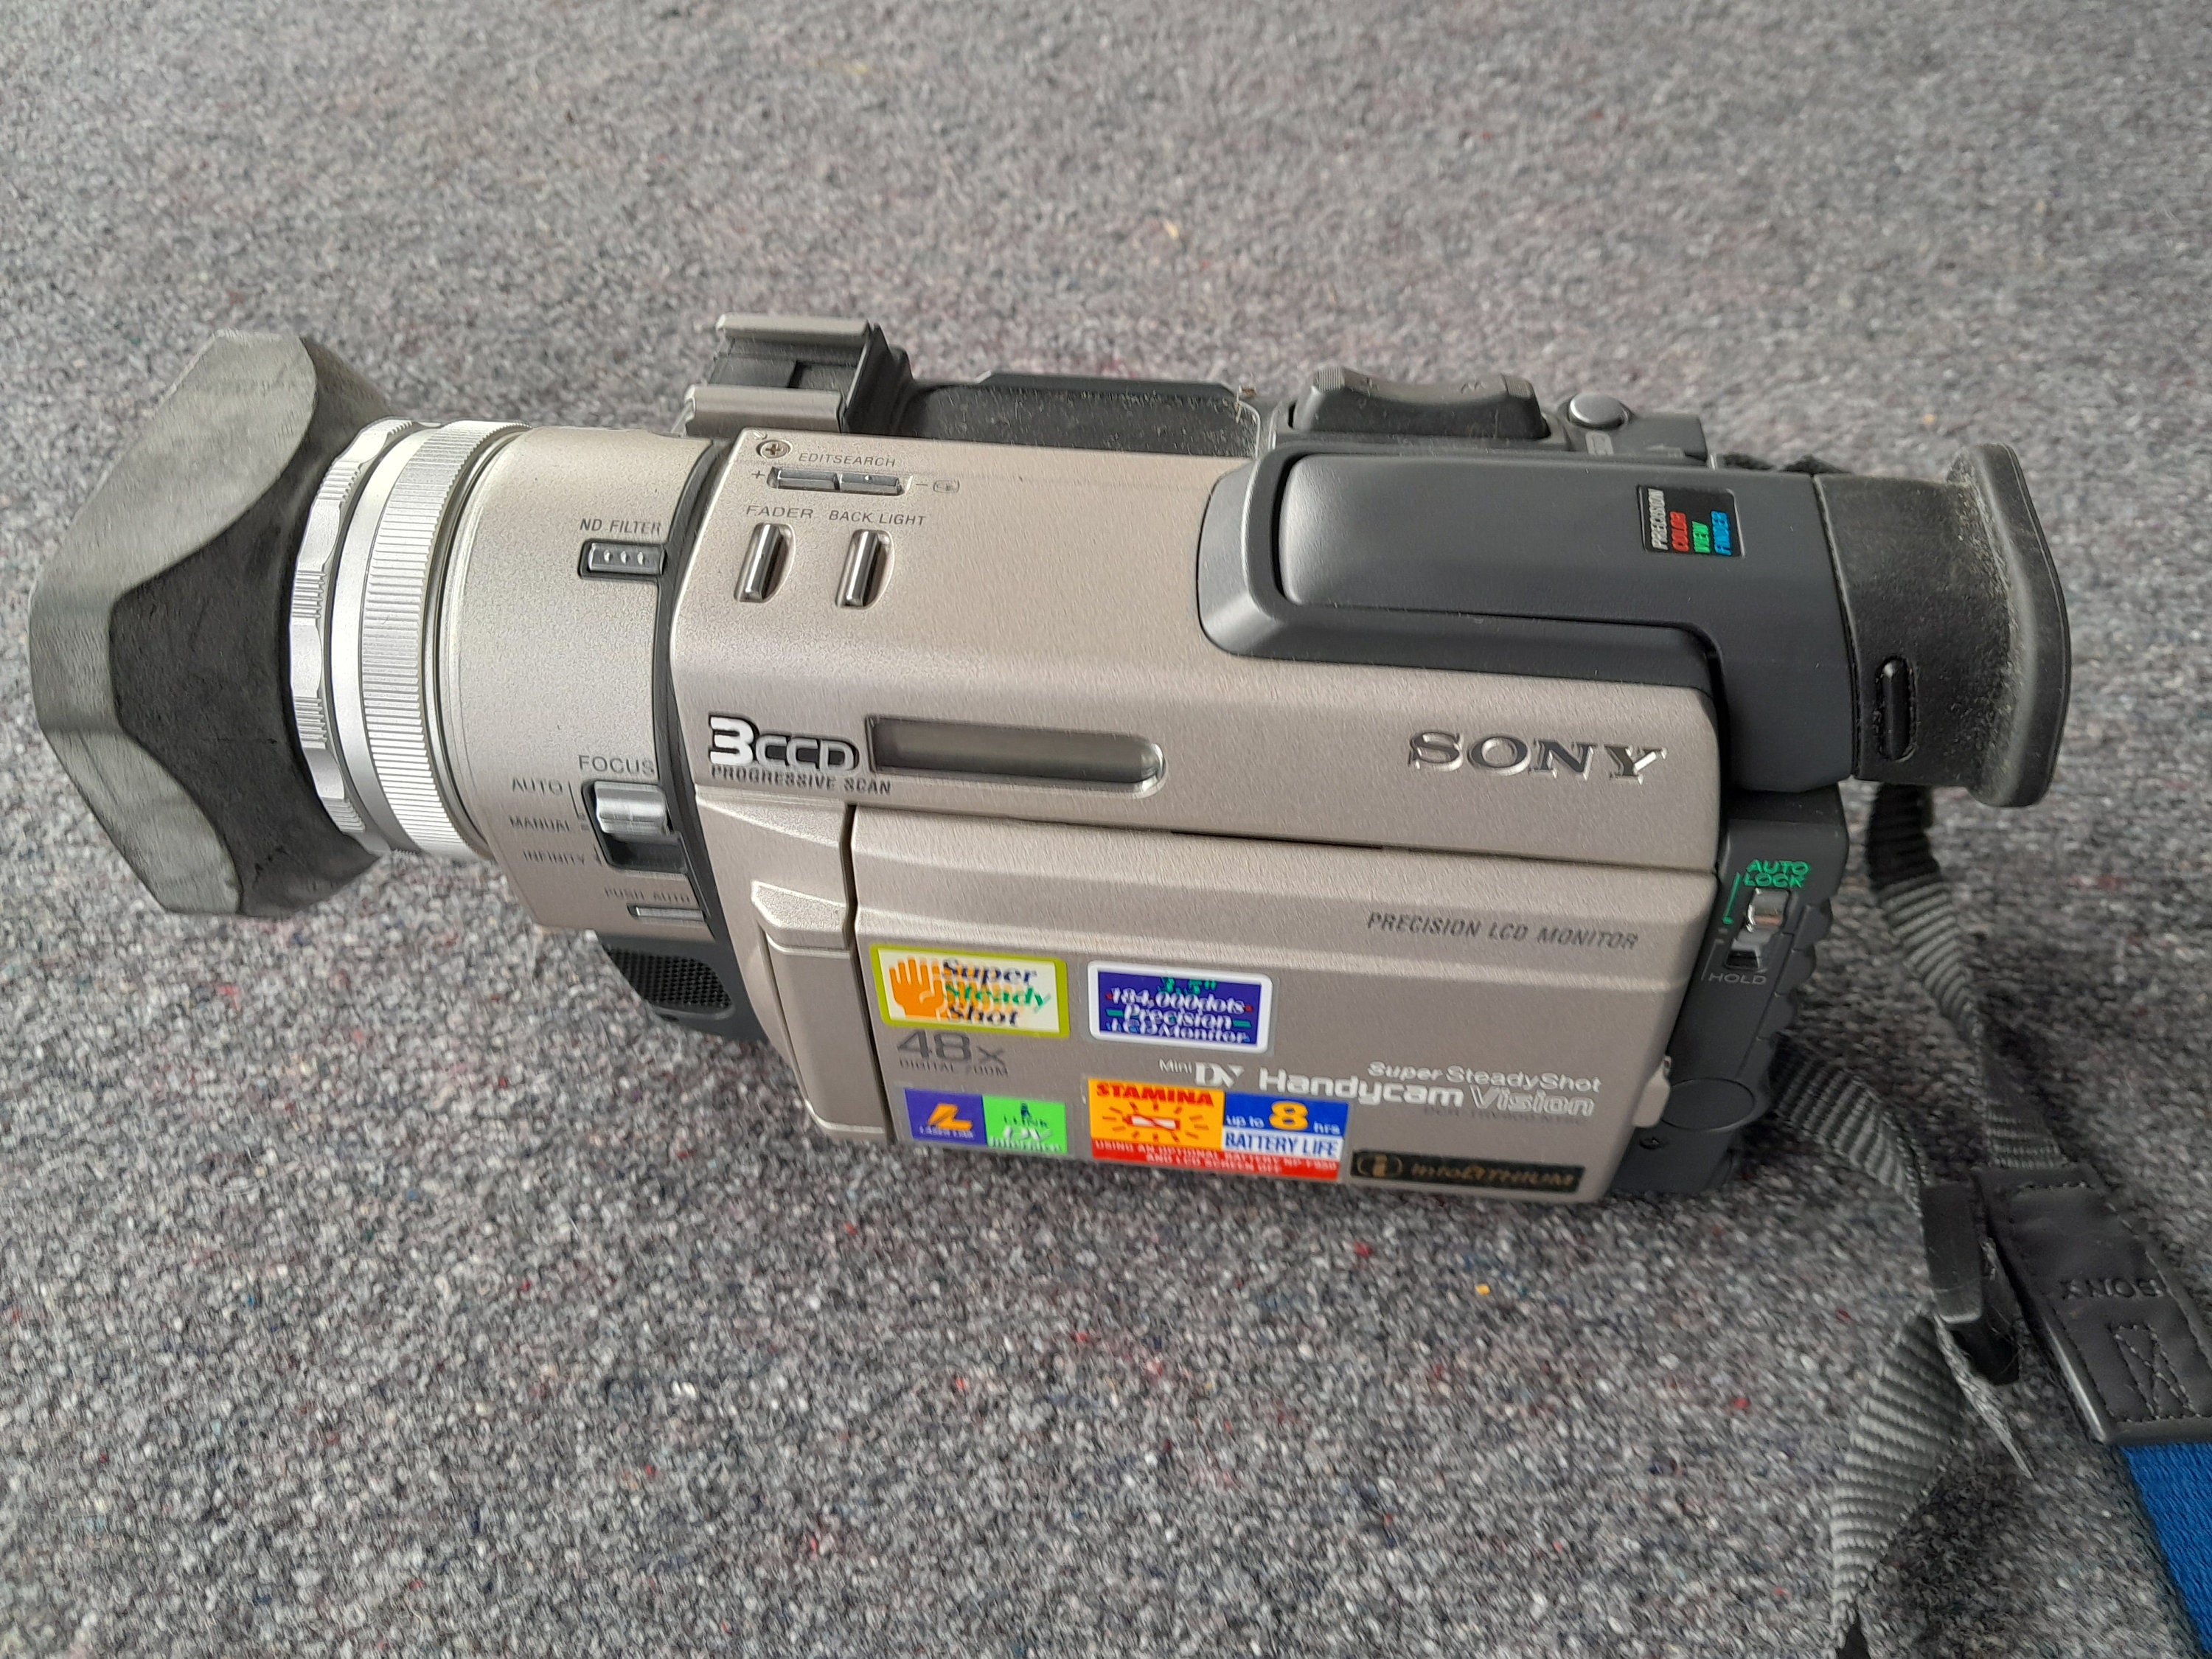 penge ring medier Sony Handycam DCR-TRV900 3CCD Semi-professional Mini DV - Etsy